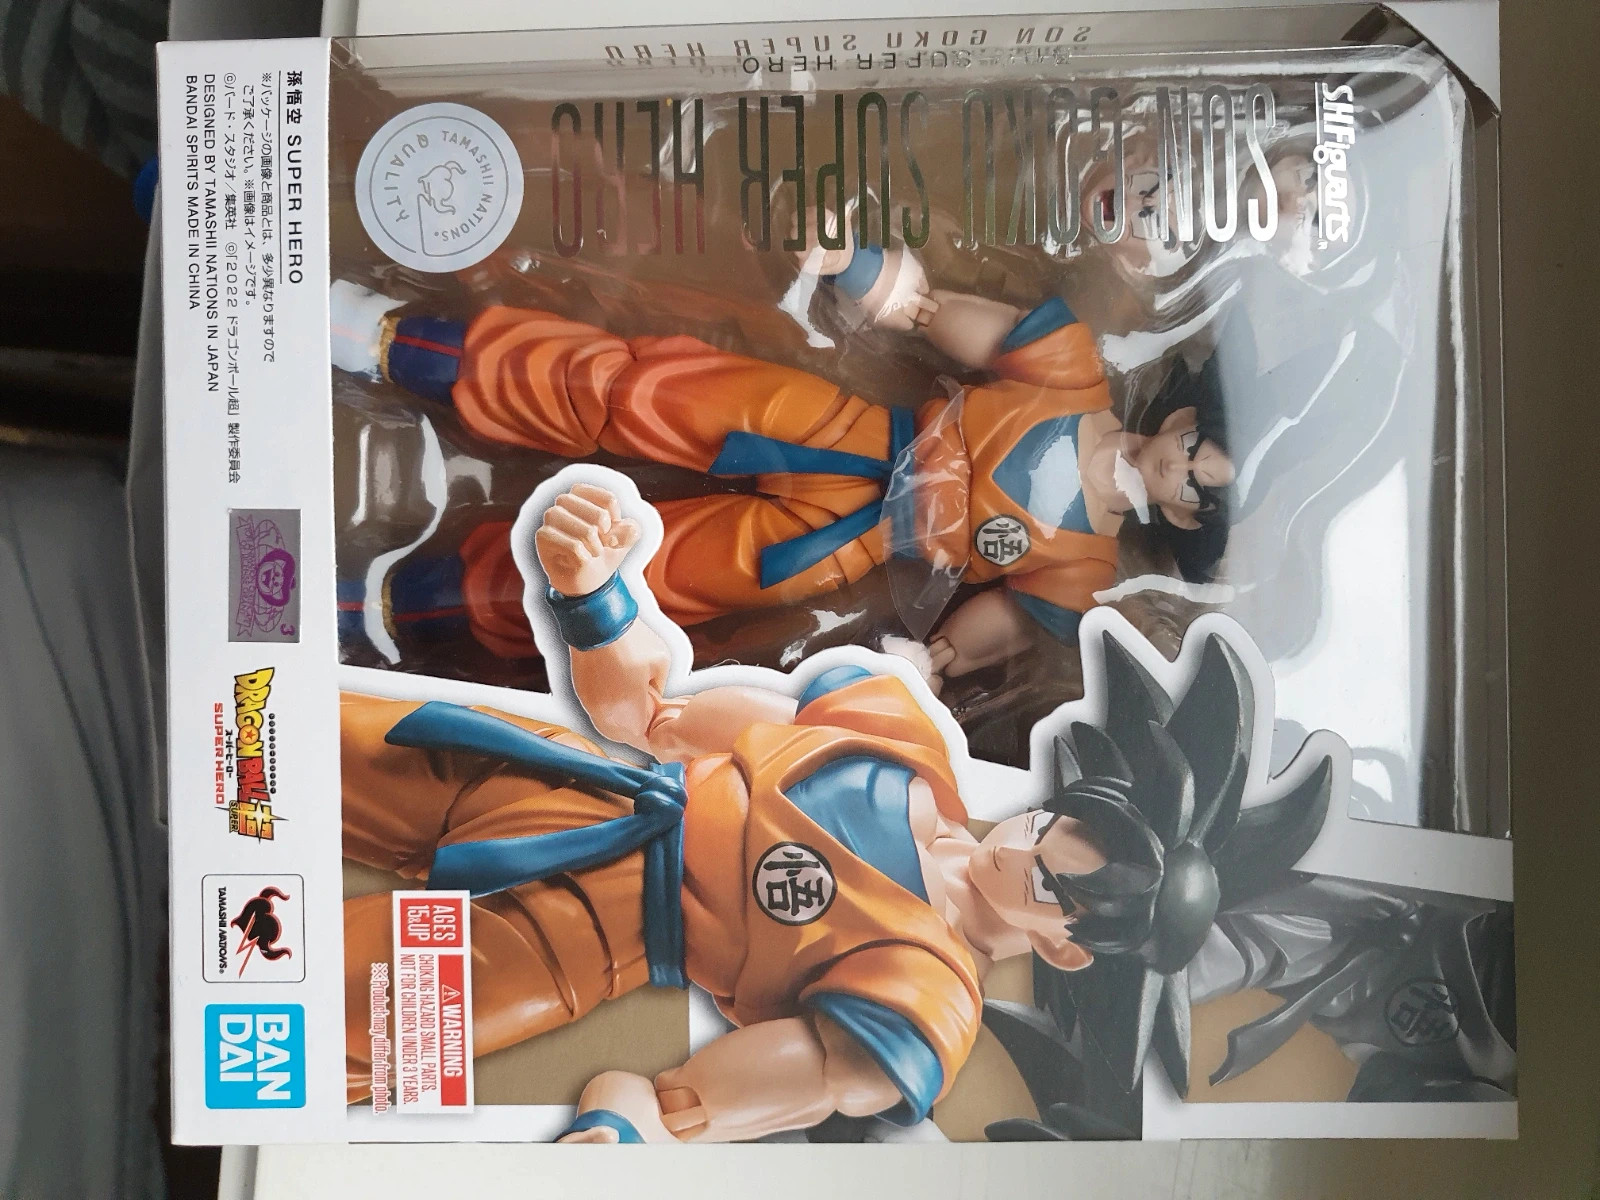 Bandai - Tamashii Nations - S.H. Figuarts - Dragonball: Son Goku Super Hero  Action Figure (2613664) LAST ONE!